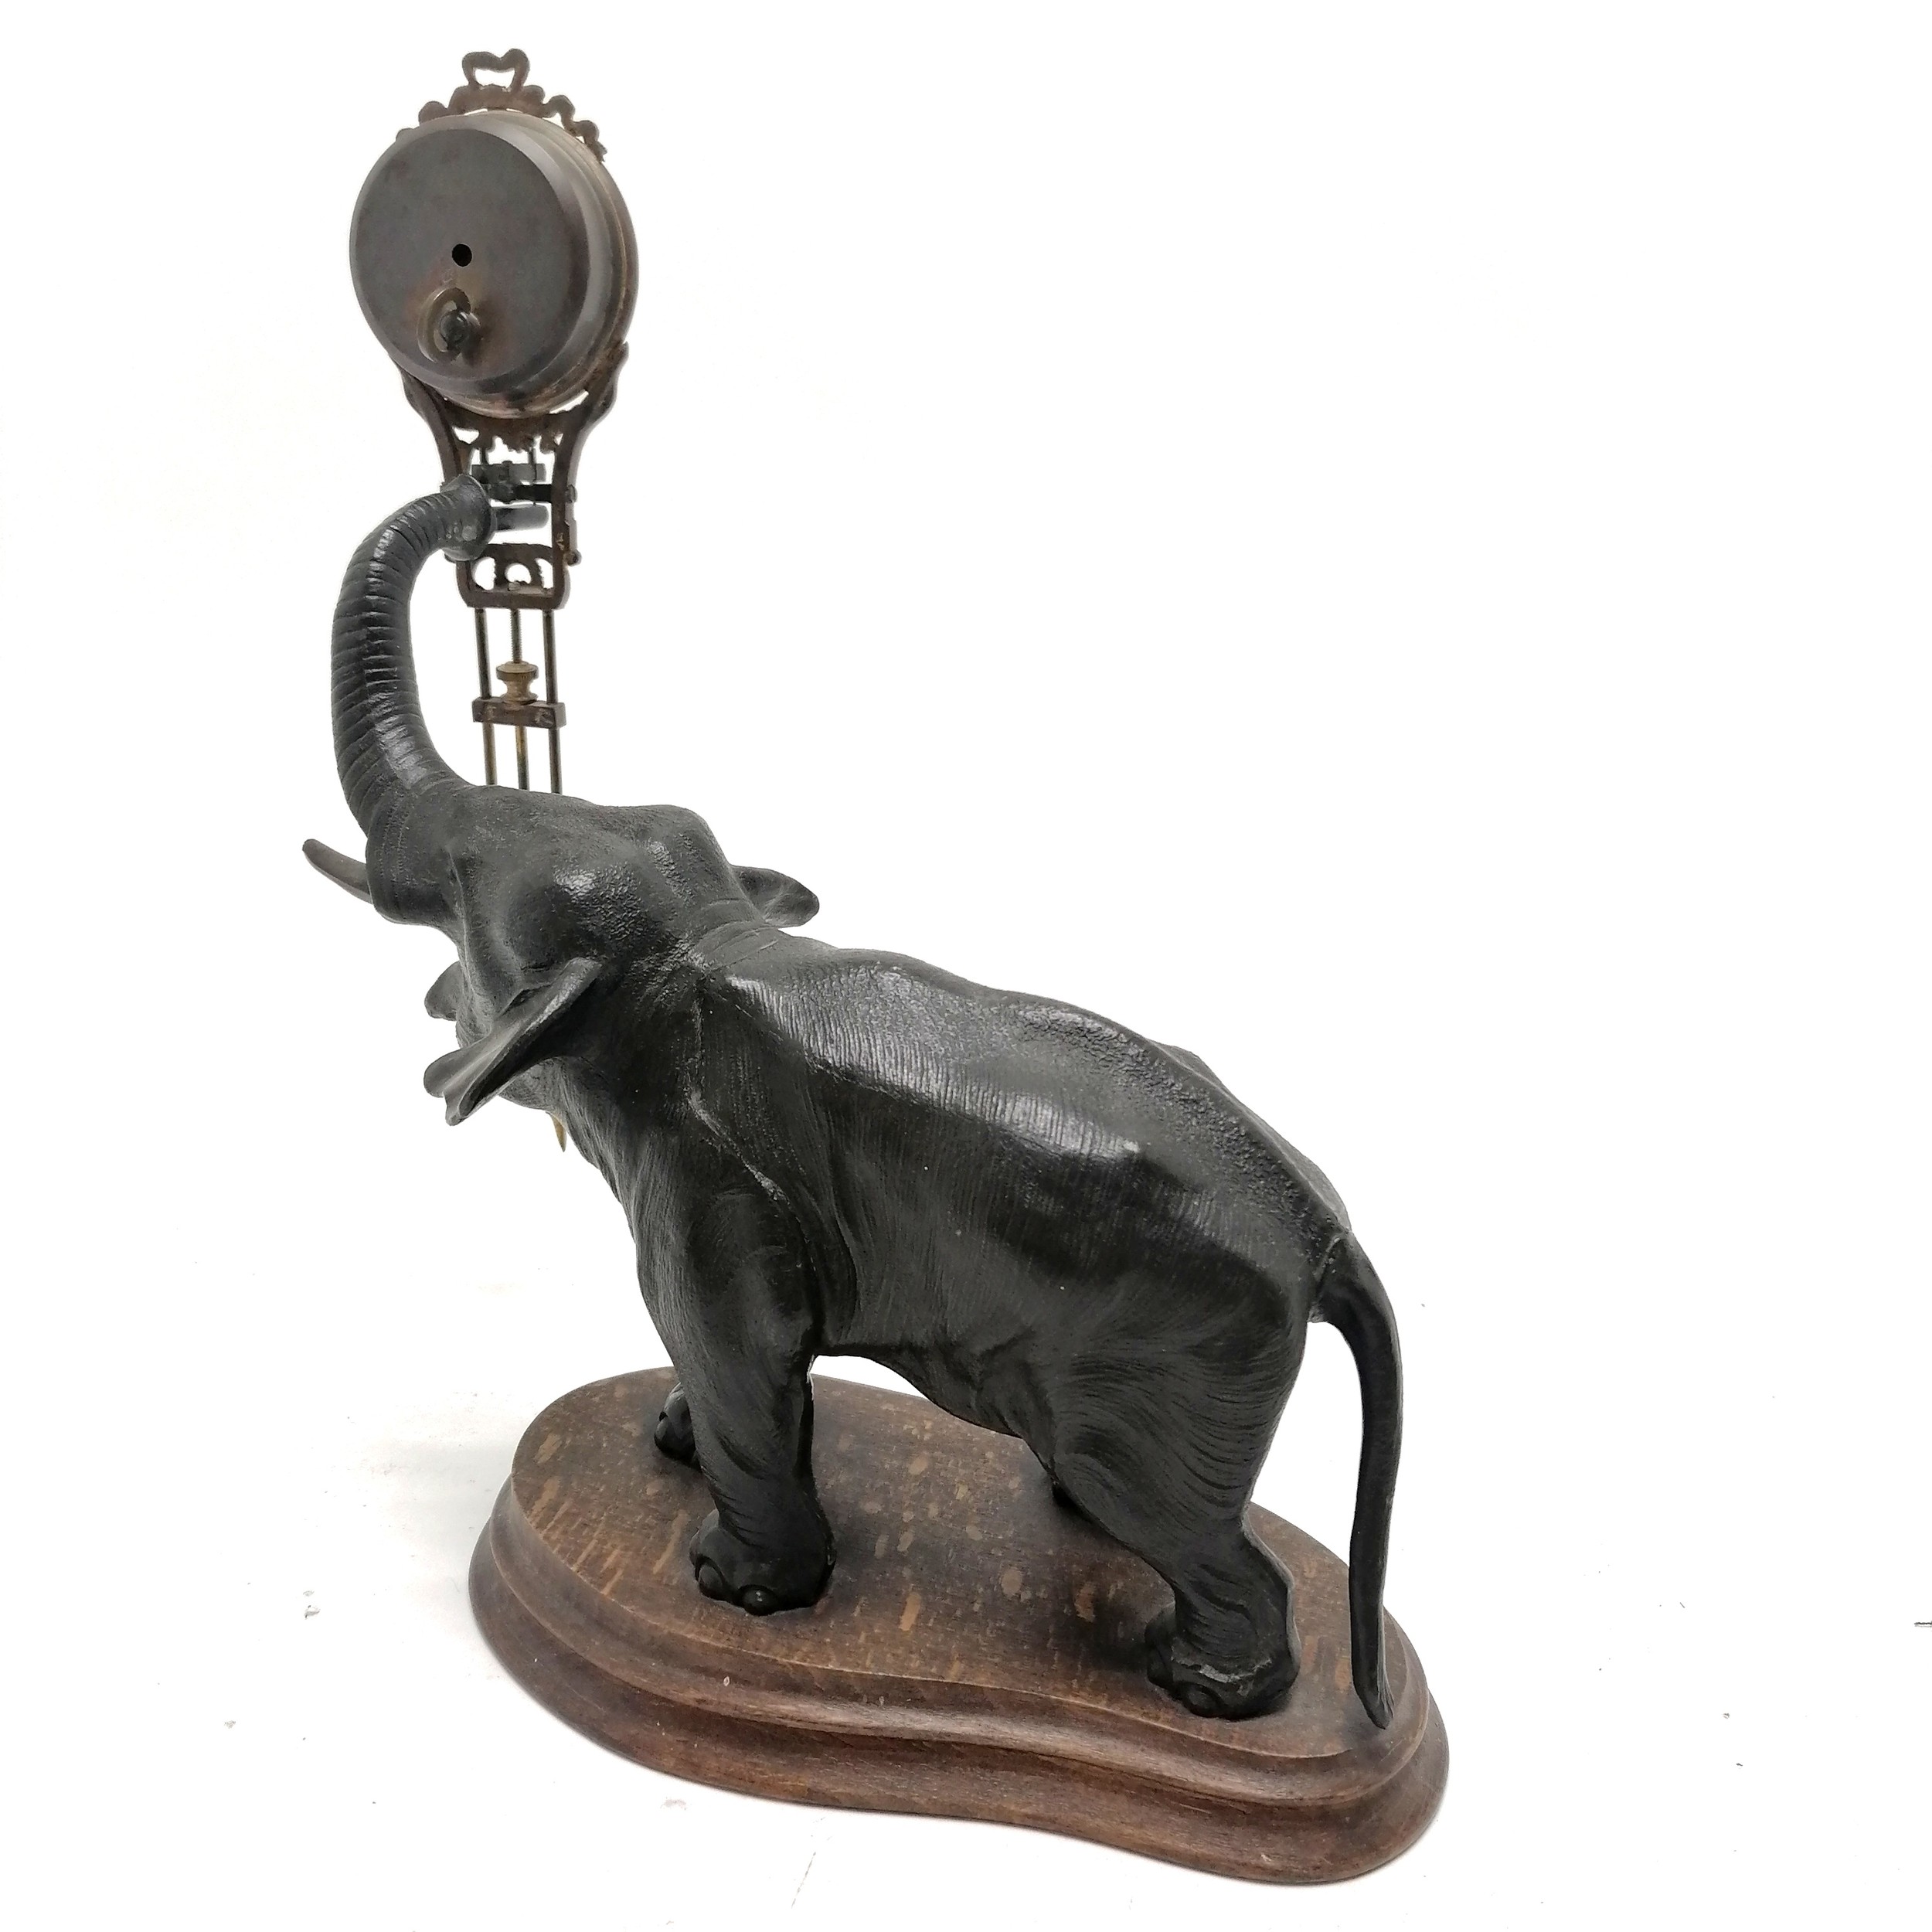 Antique French bronze Elephant pendulum clock on a wooden base 28cm high - the pendulum is bent - Image 4 of 8